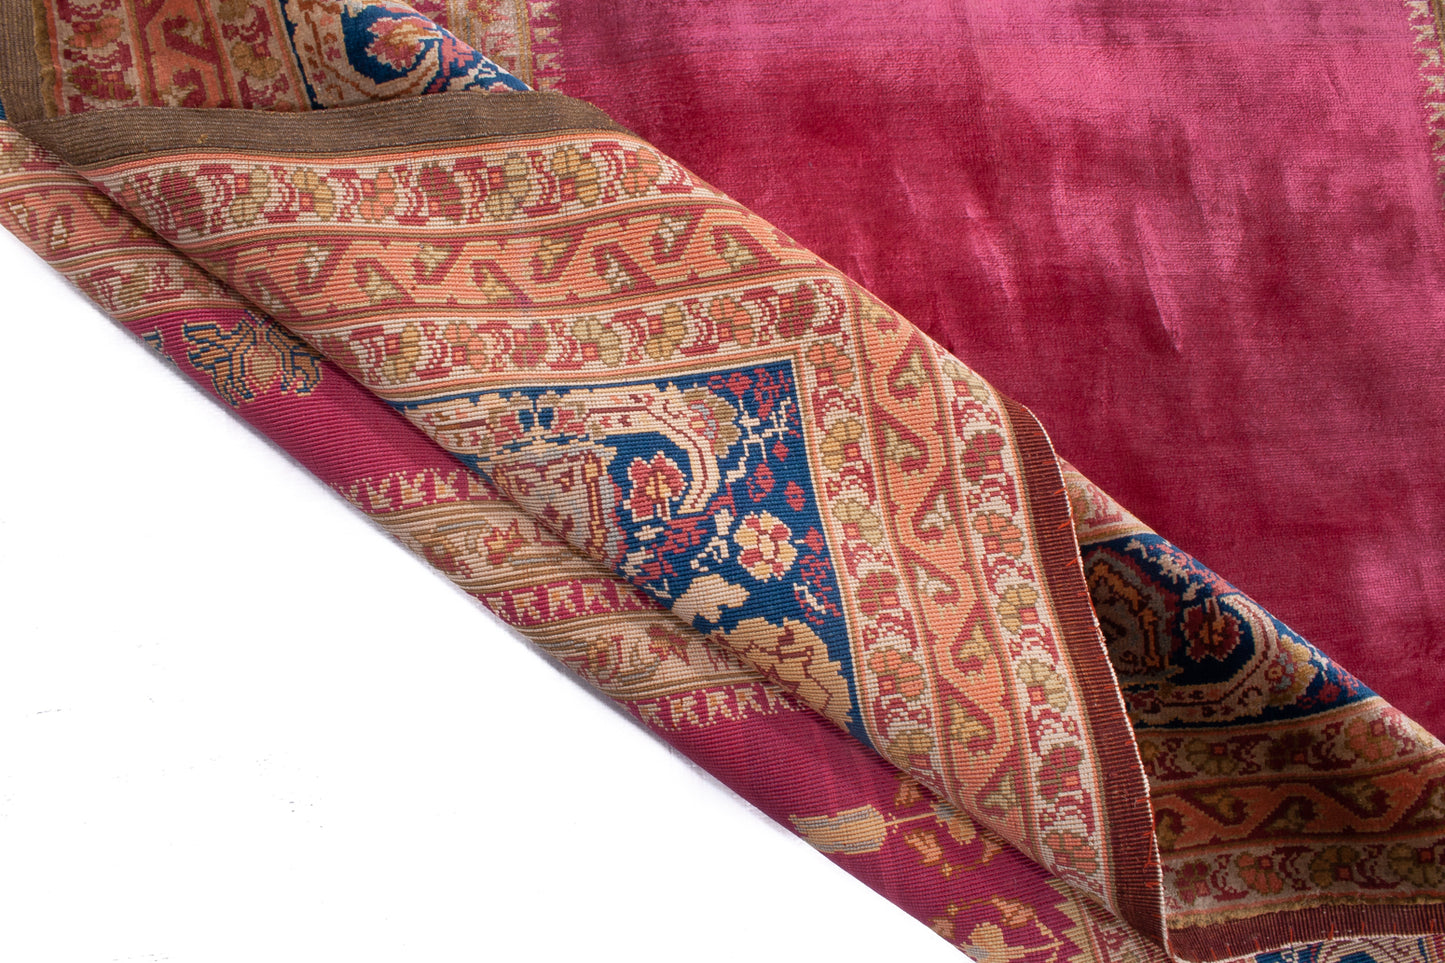 Antique Turkish Konya Rug